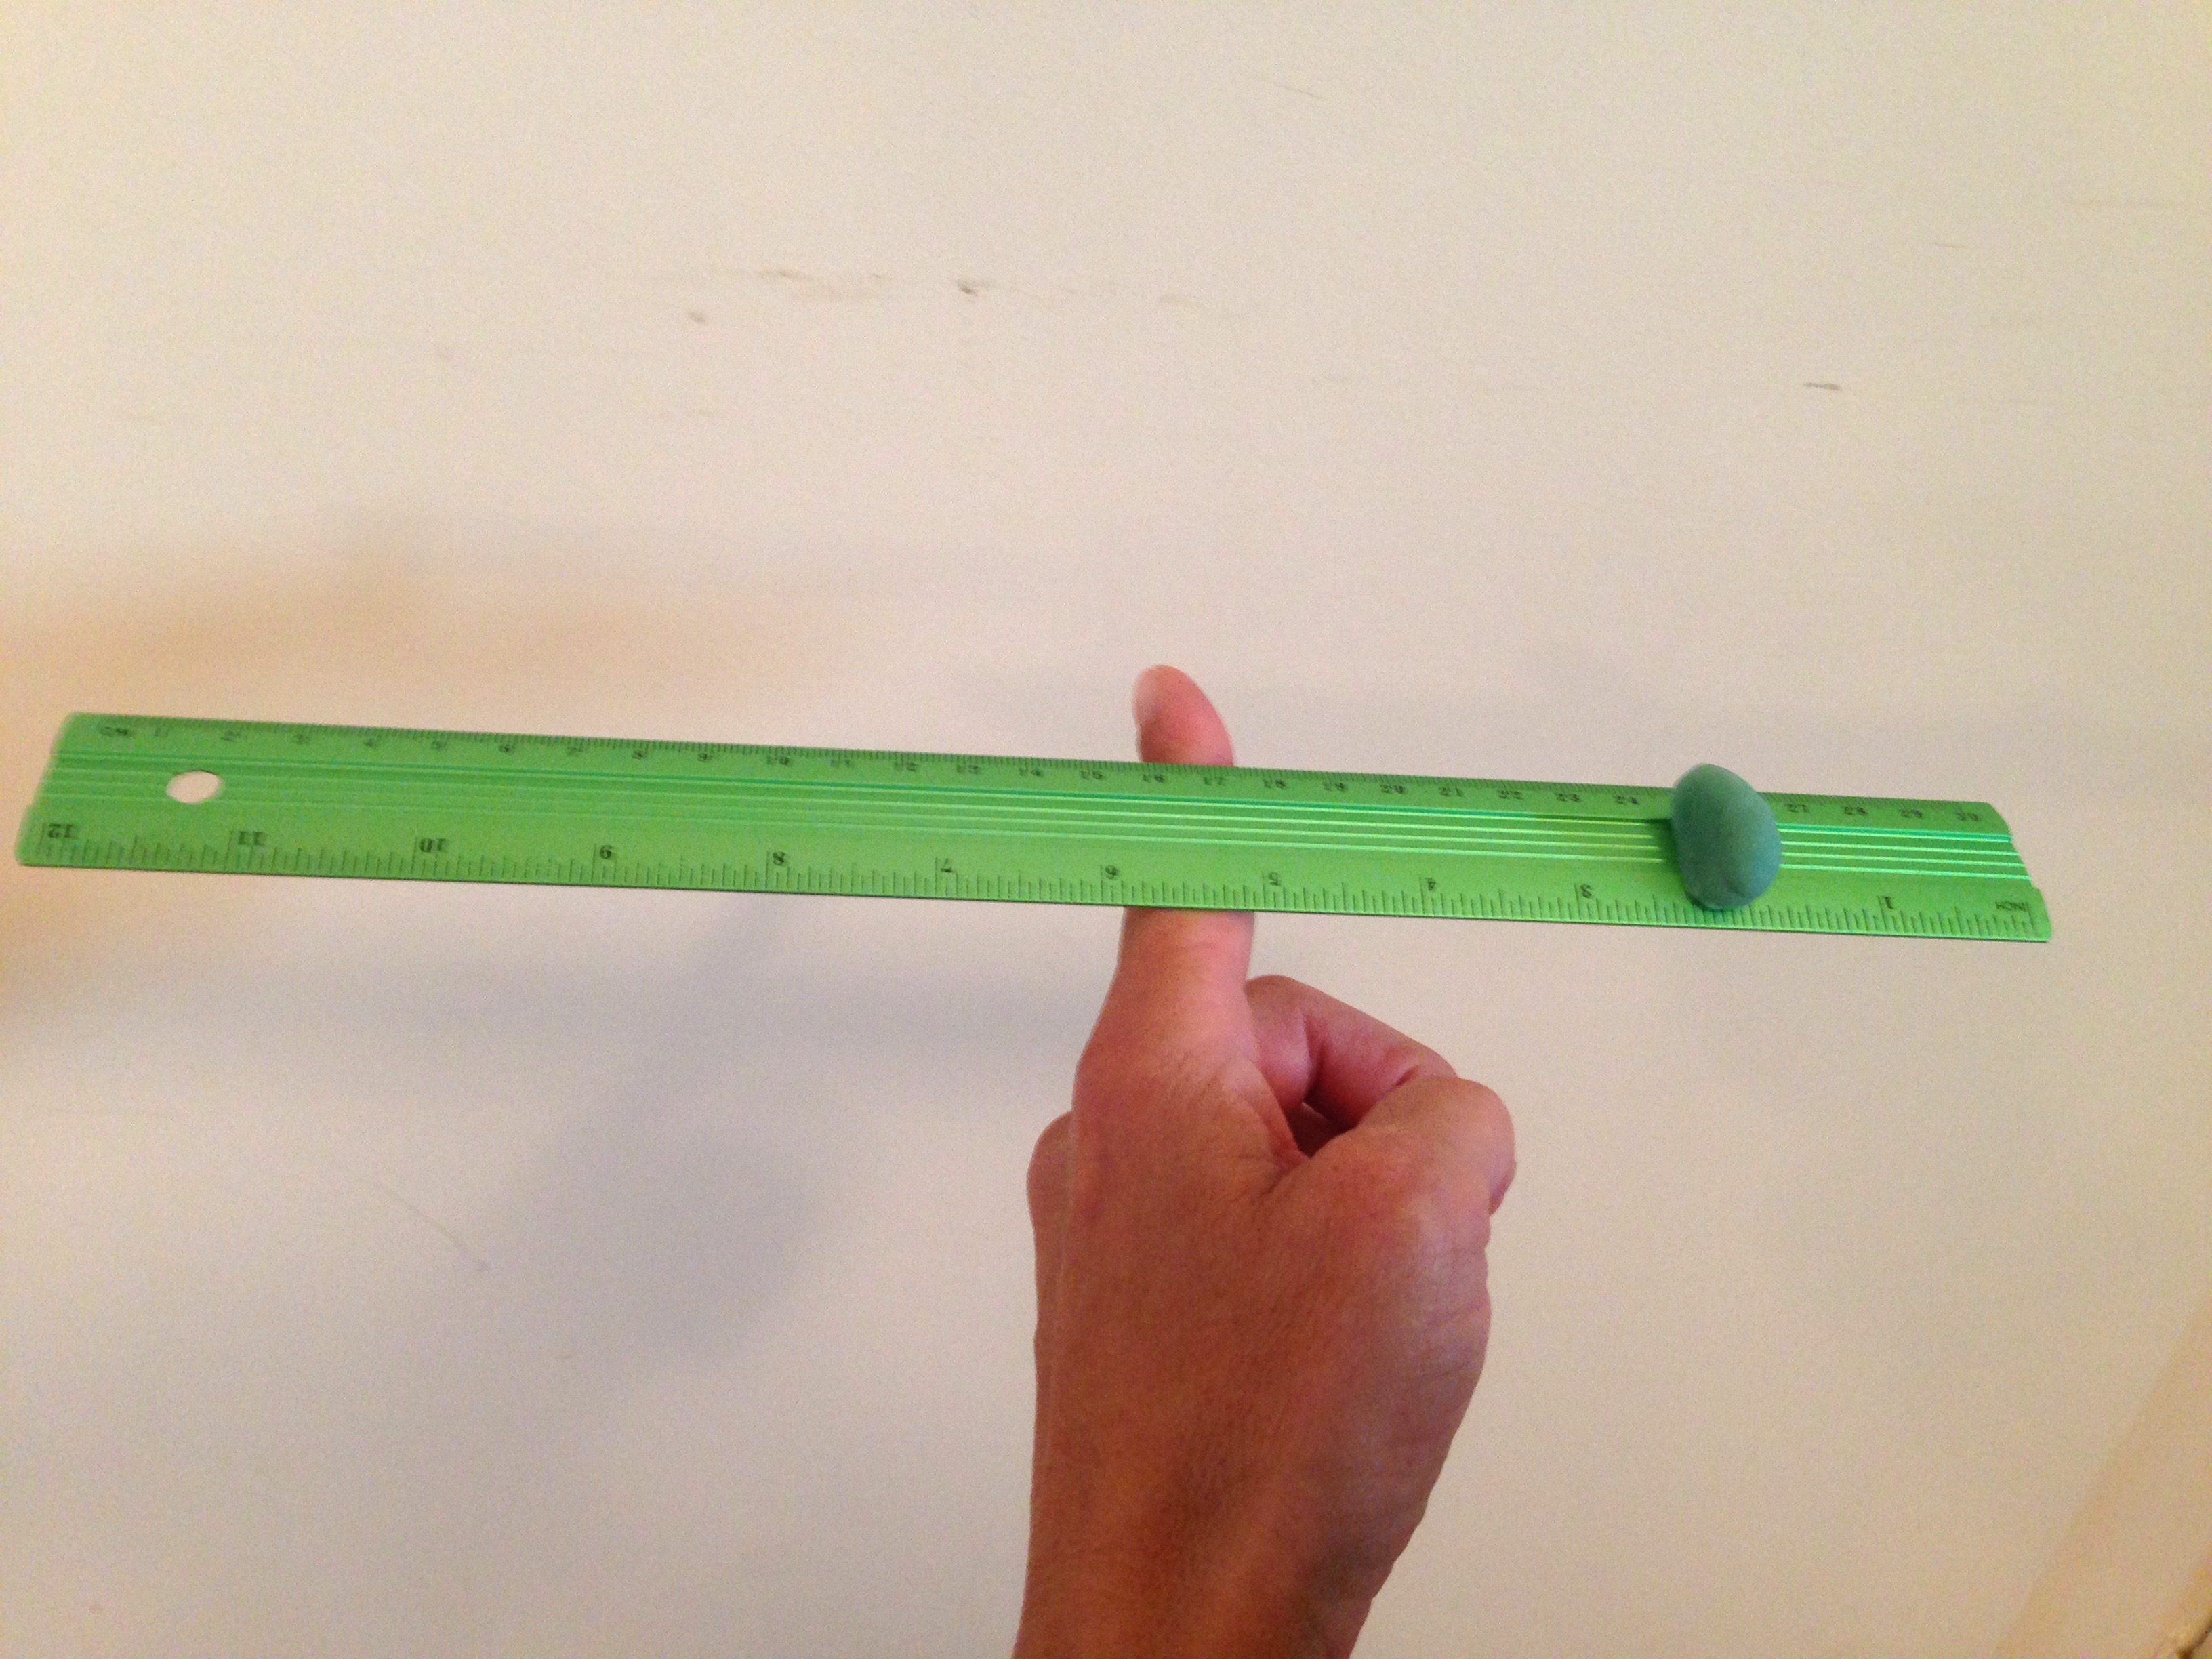 stick on ruler